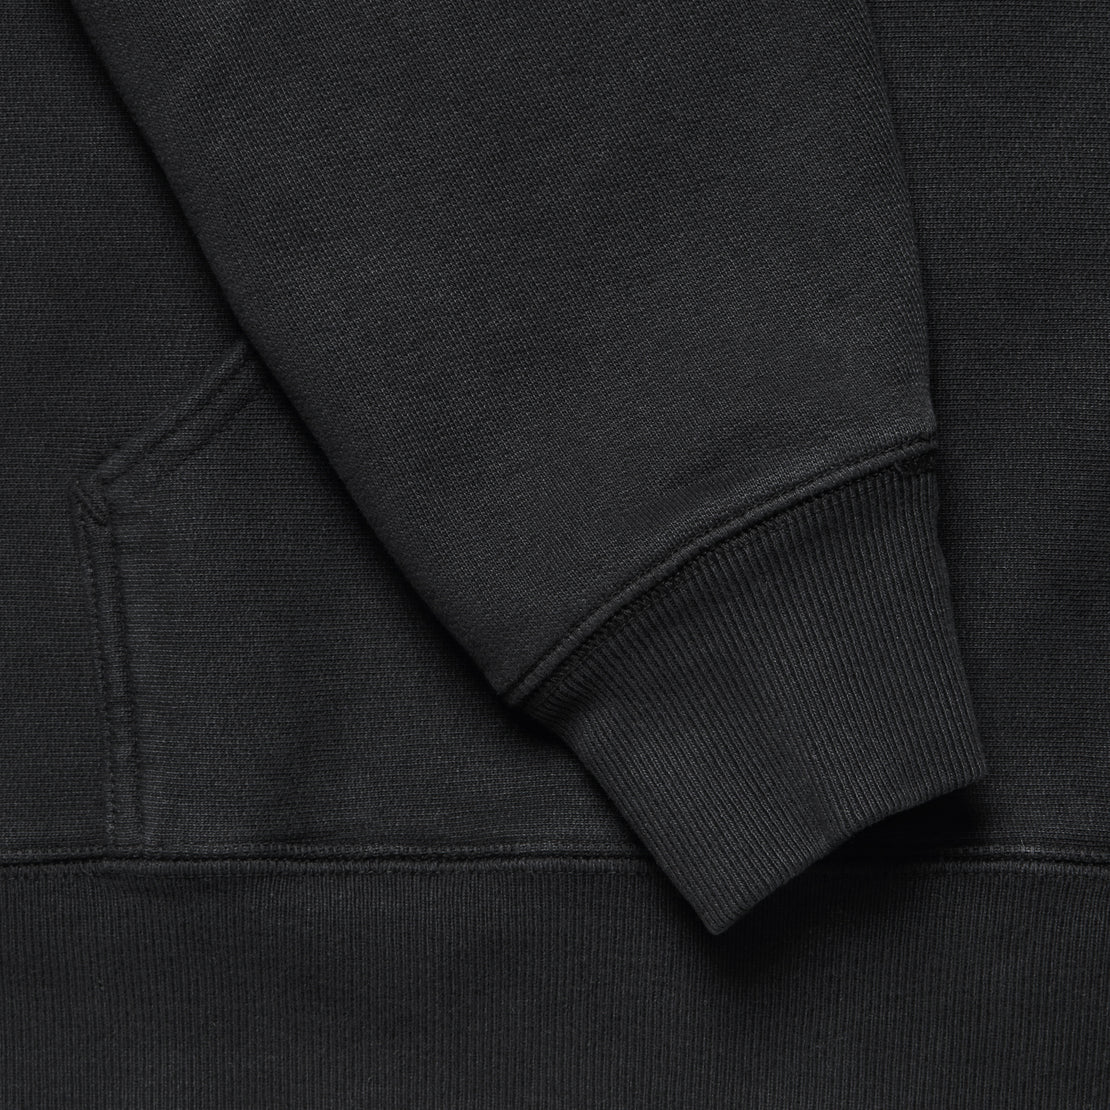 Arctic Knit Hoodie - Black - Knickerbocker - STAG Provisions - Tops - Fleece / Sweatshirt